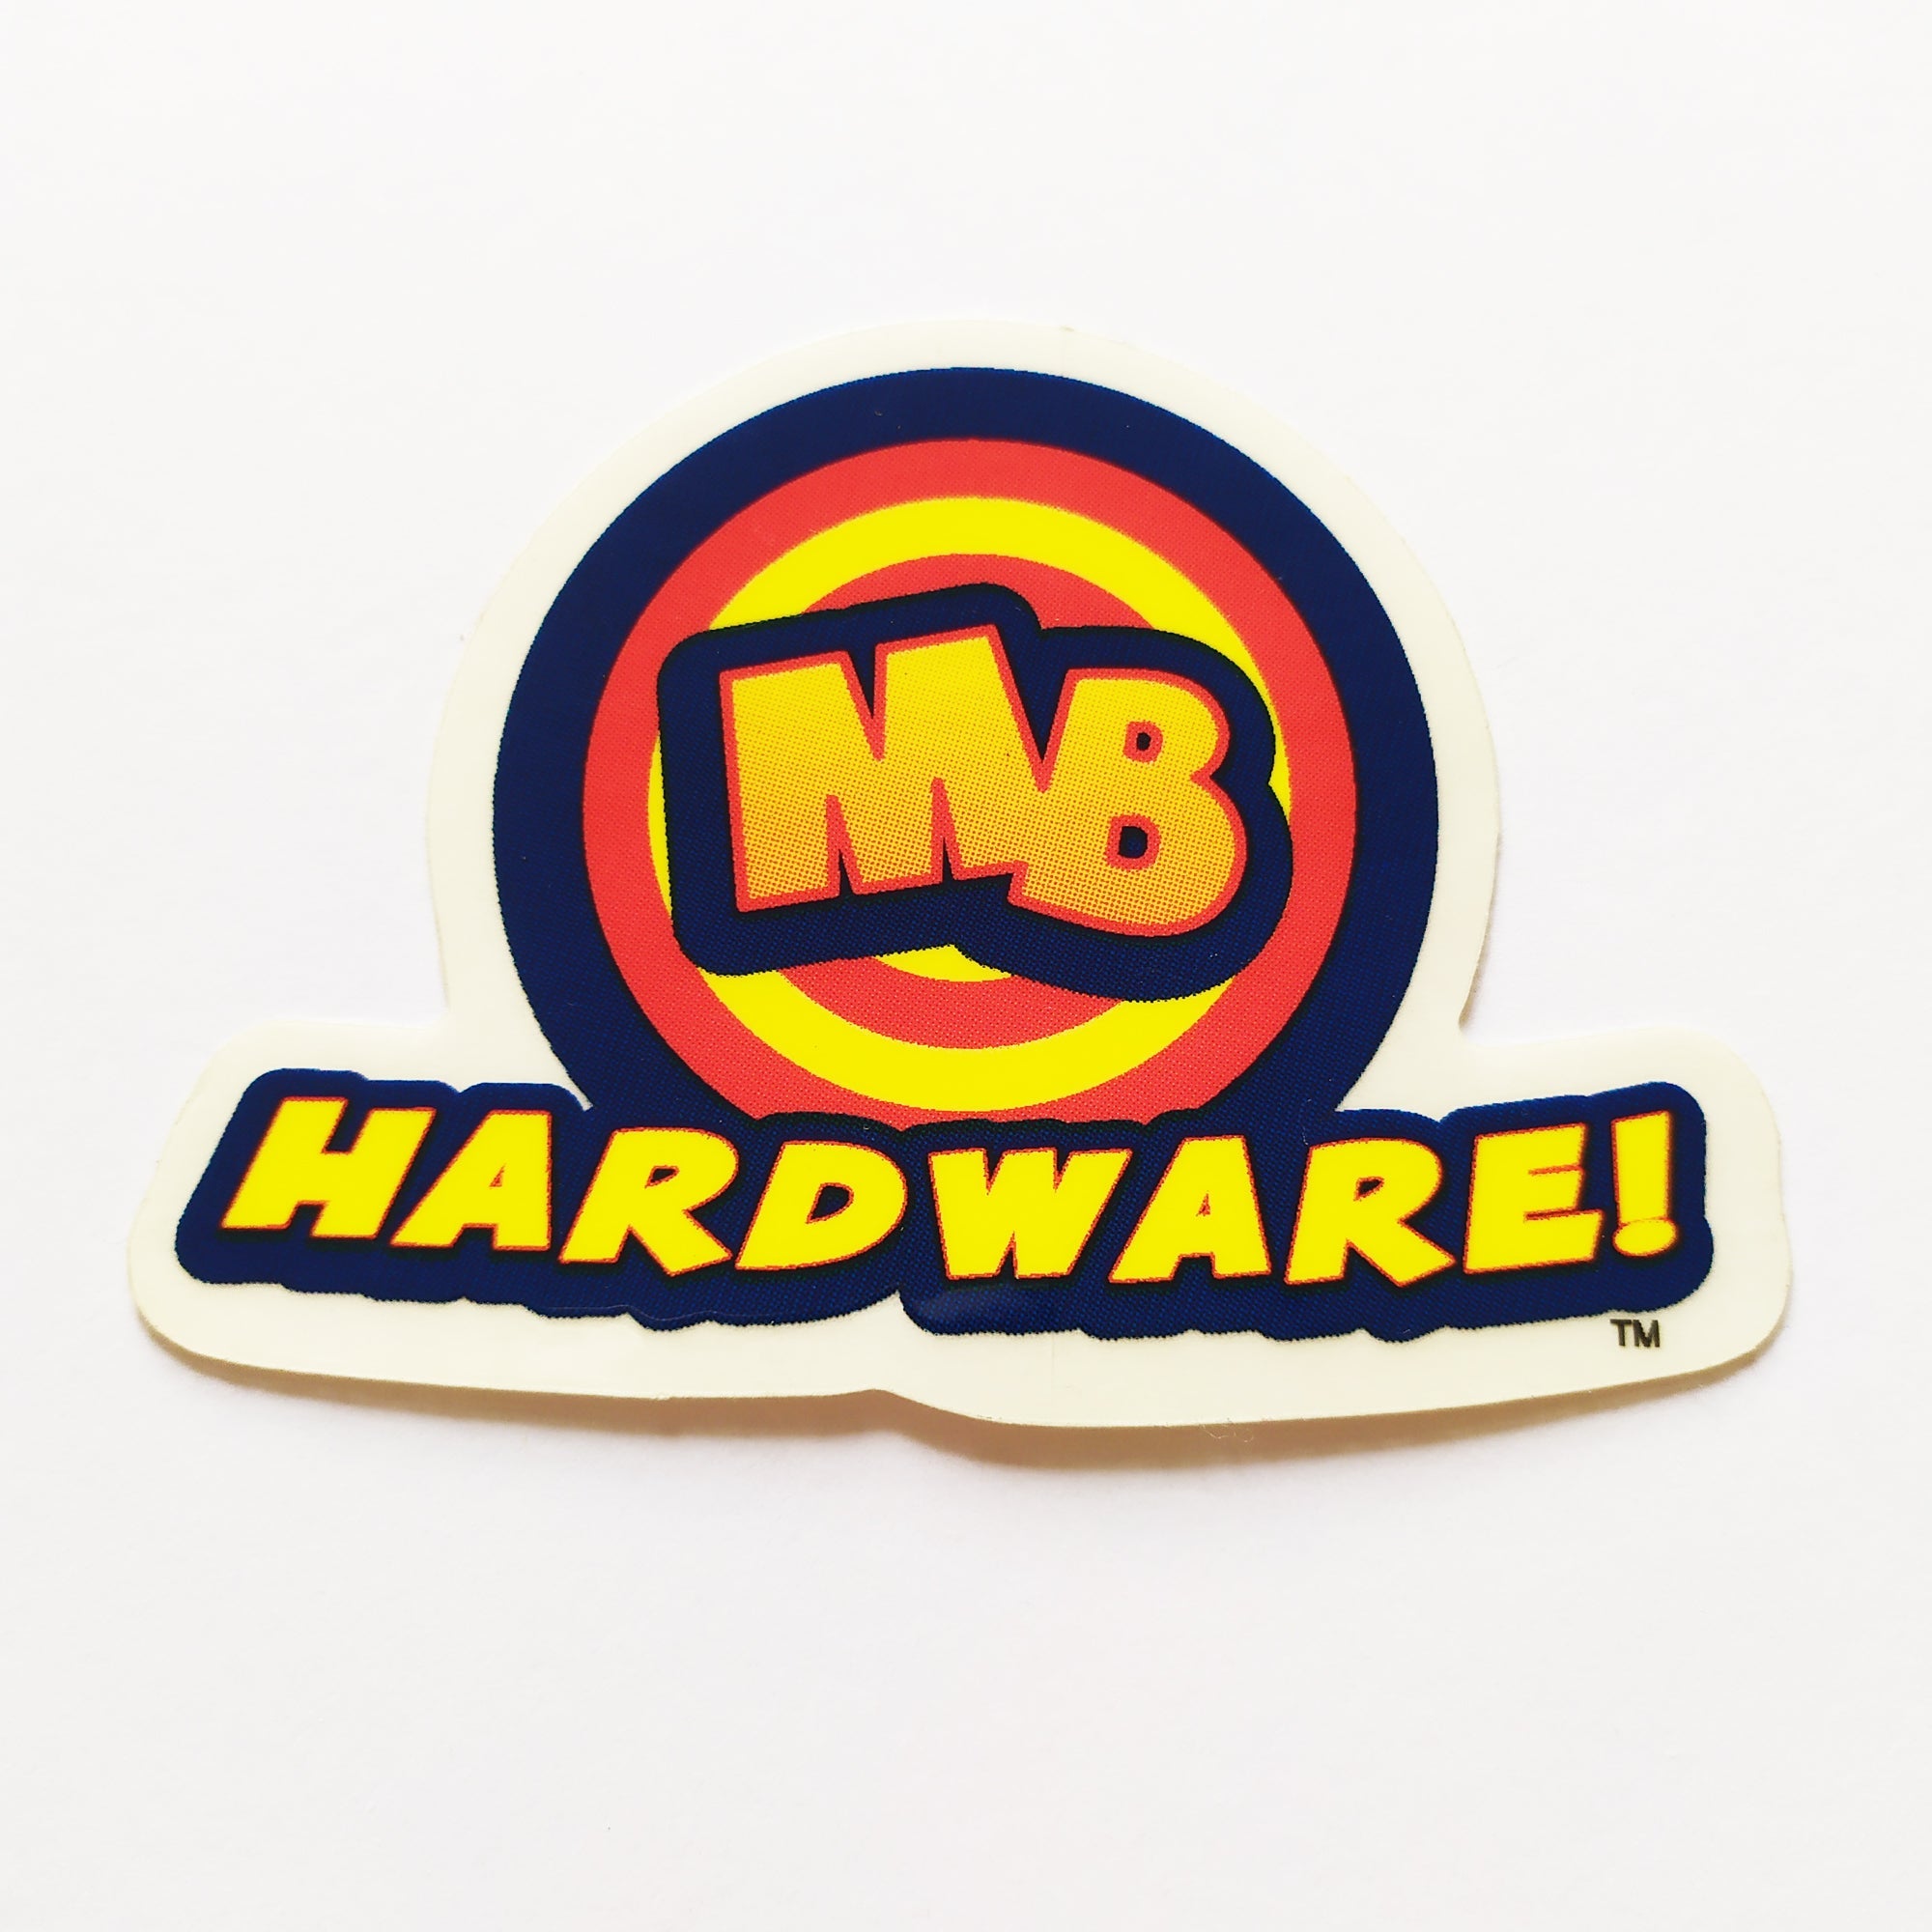 MB Hardware Skateboard Sticker - SkateboardStickers.com